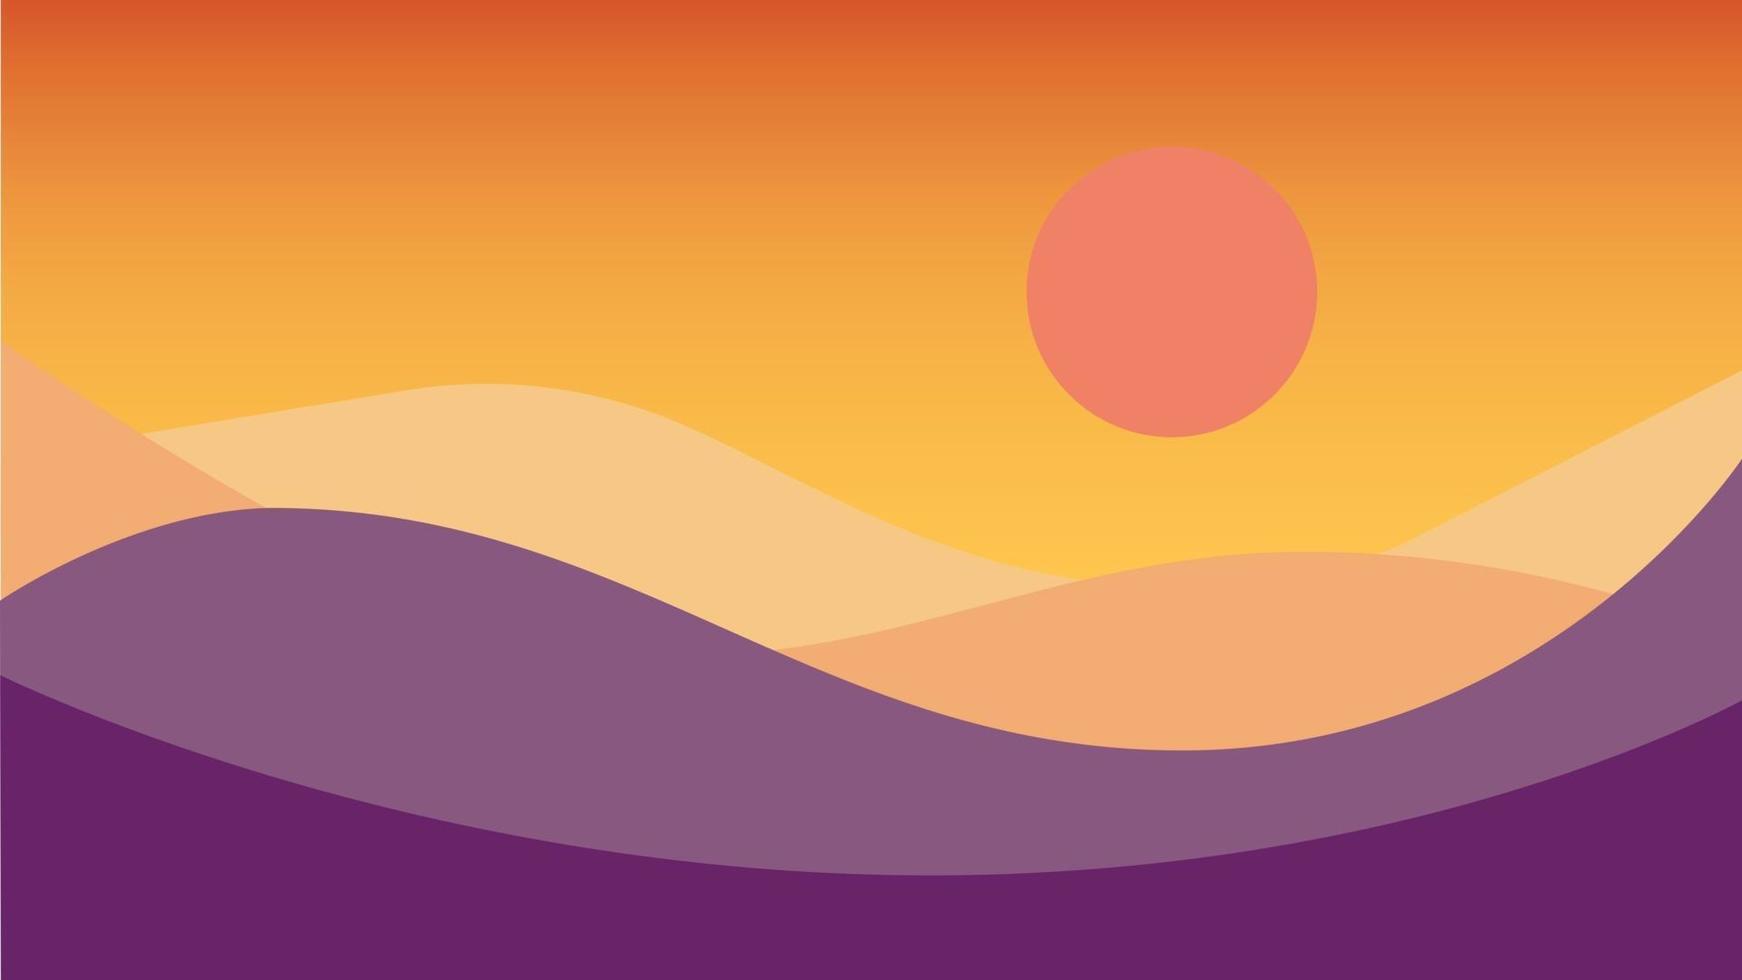 Simplicity desert sand dune landscape when sunset modern style wallpaper background. vector